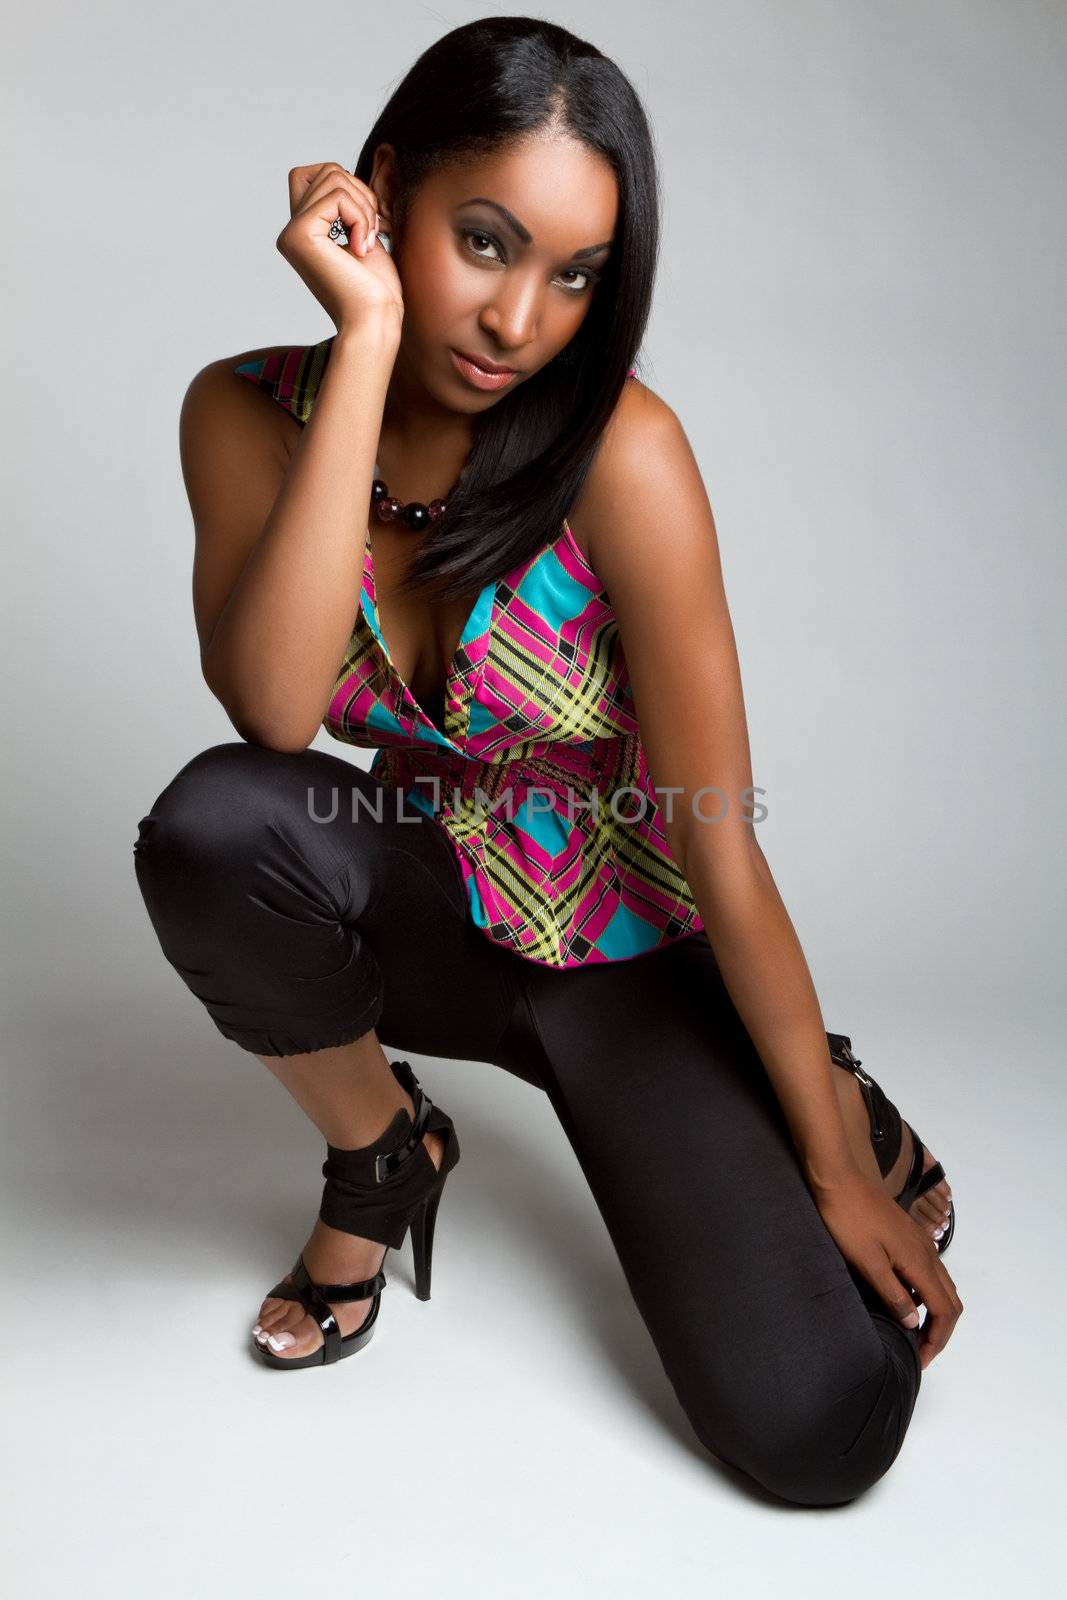 Beautiful black fashion model woman